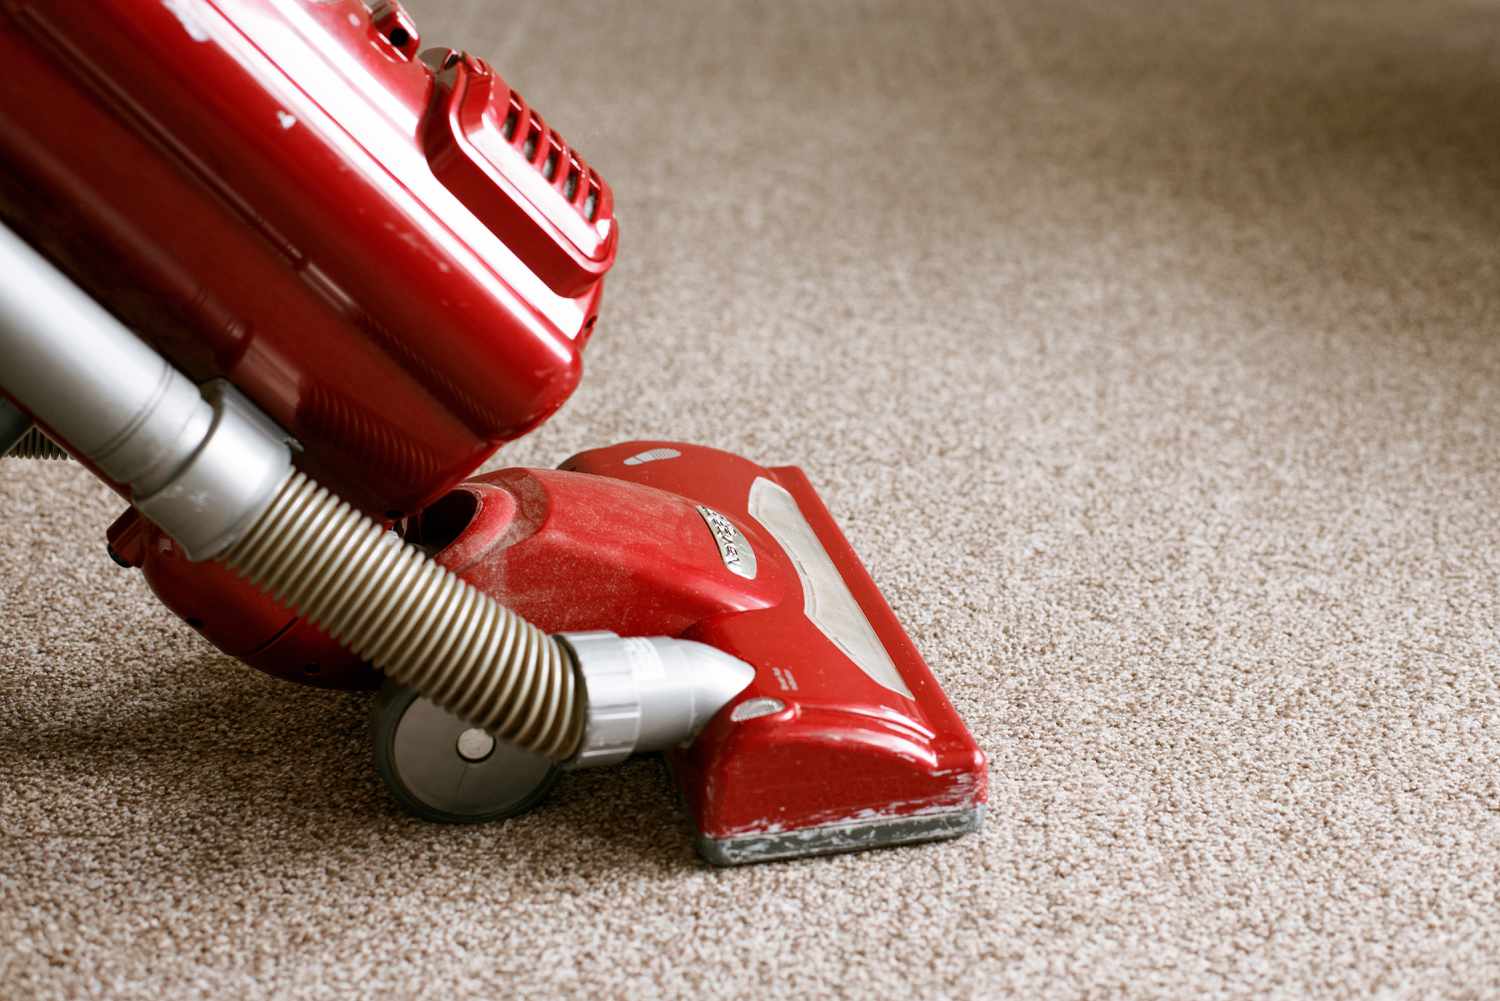 Red vacuum cleaning tan carpet